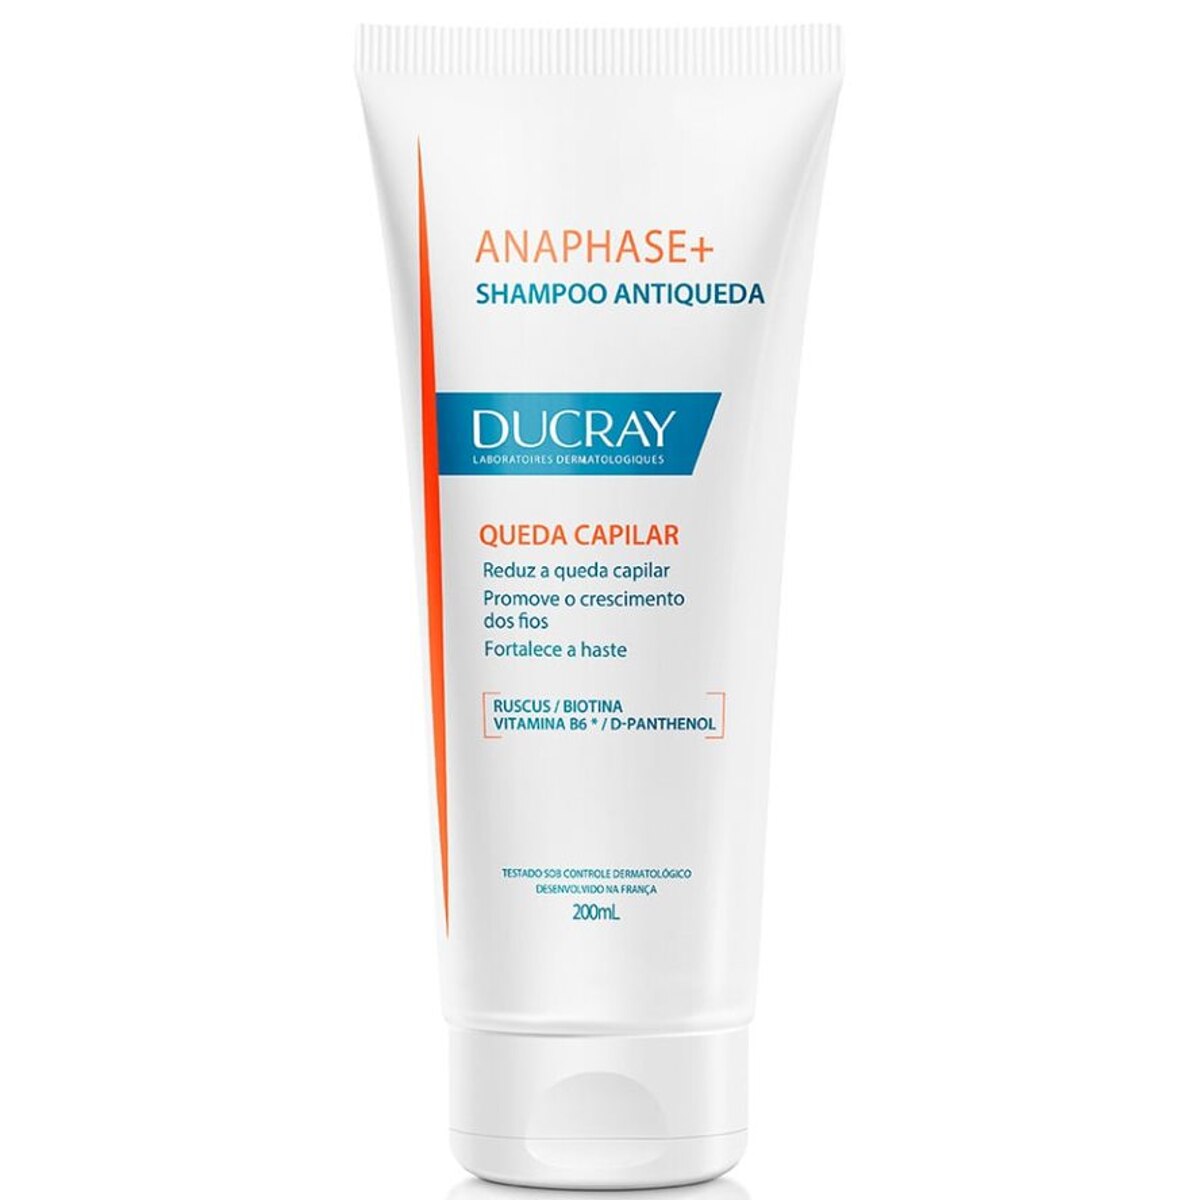 Shampoo Ducray Anaphase+ Antiqueda 200ml